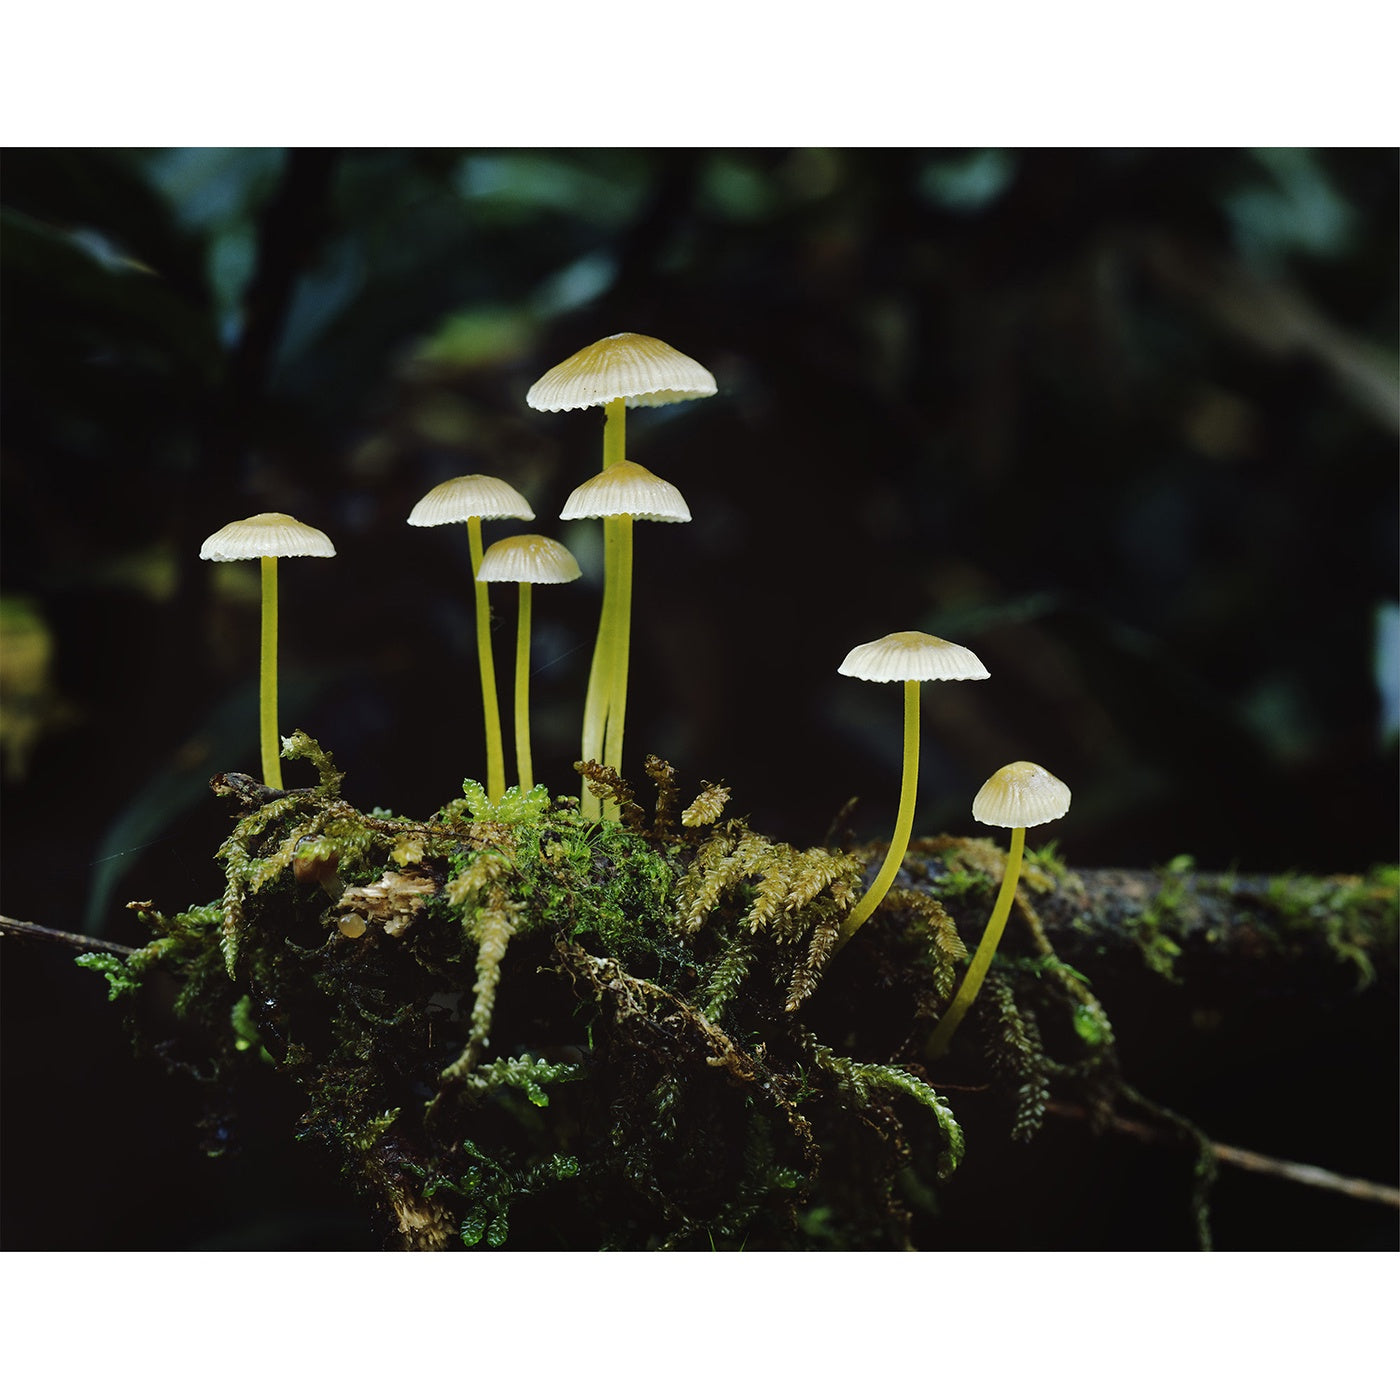 Peter Dombrovskis - Rainforest fungi, Franklin-Gordon Wild Rivers National Park